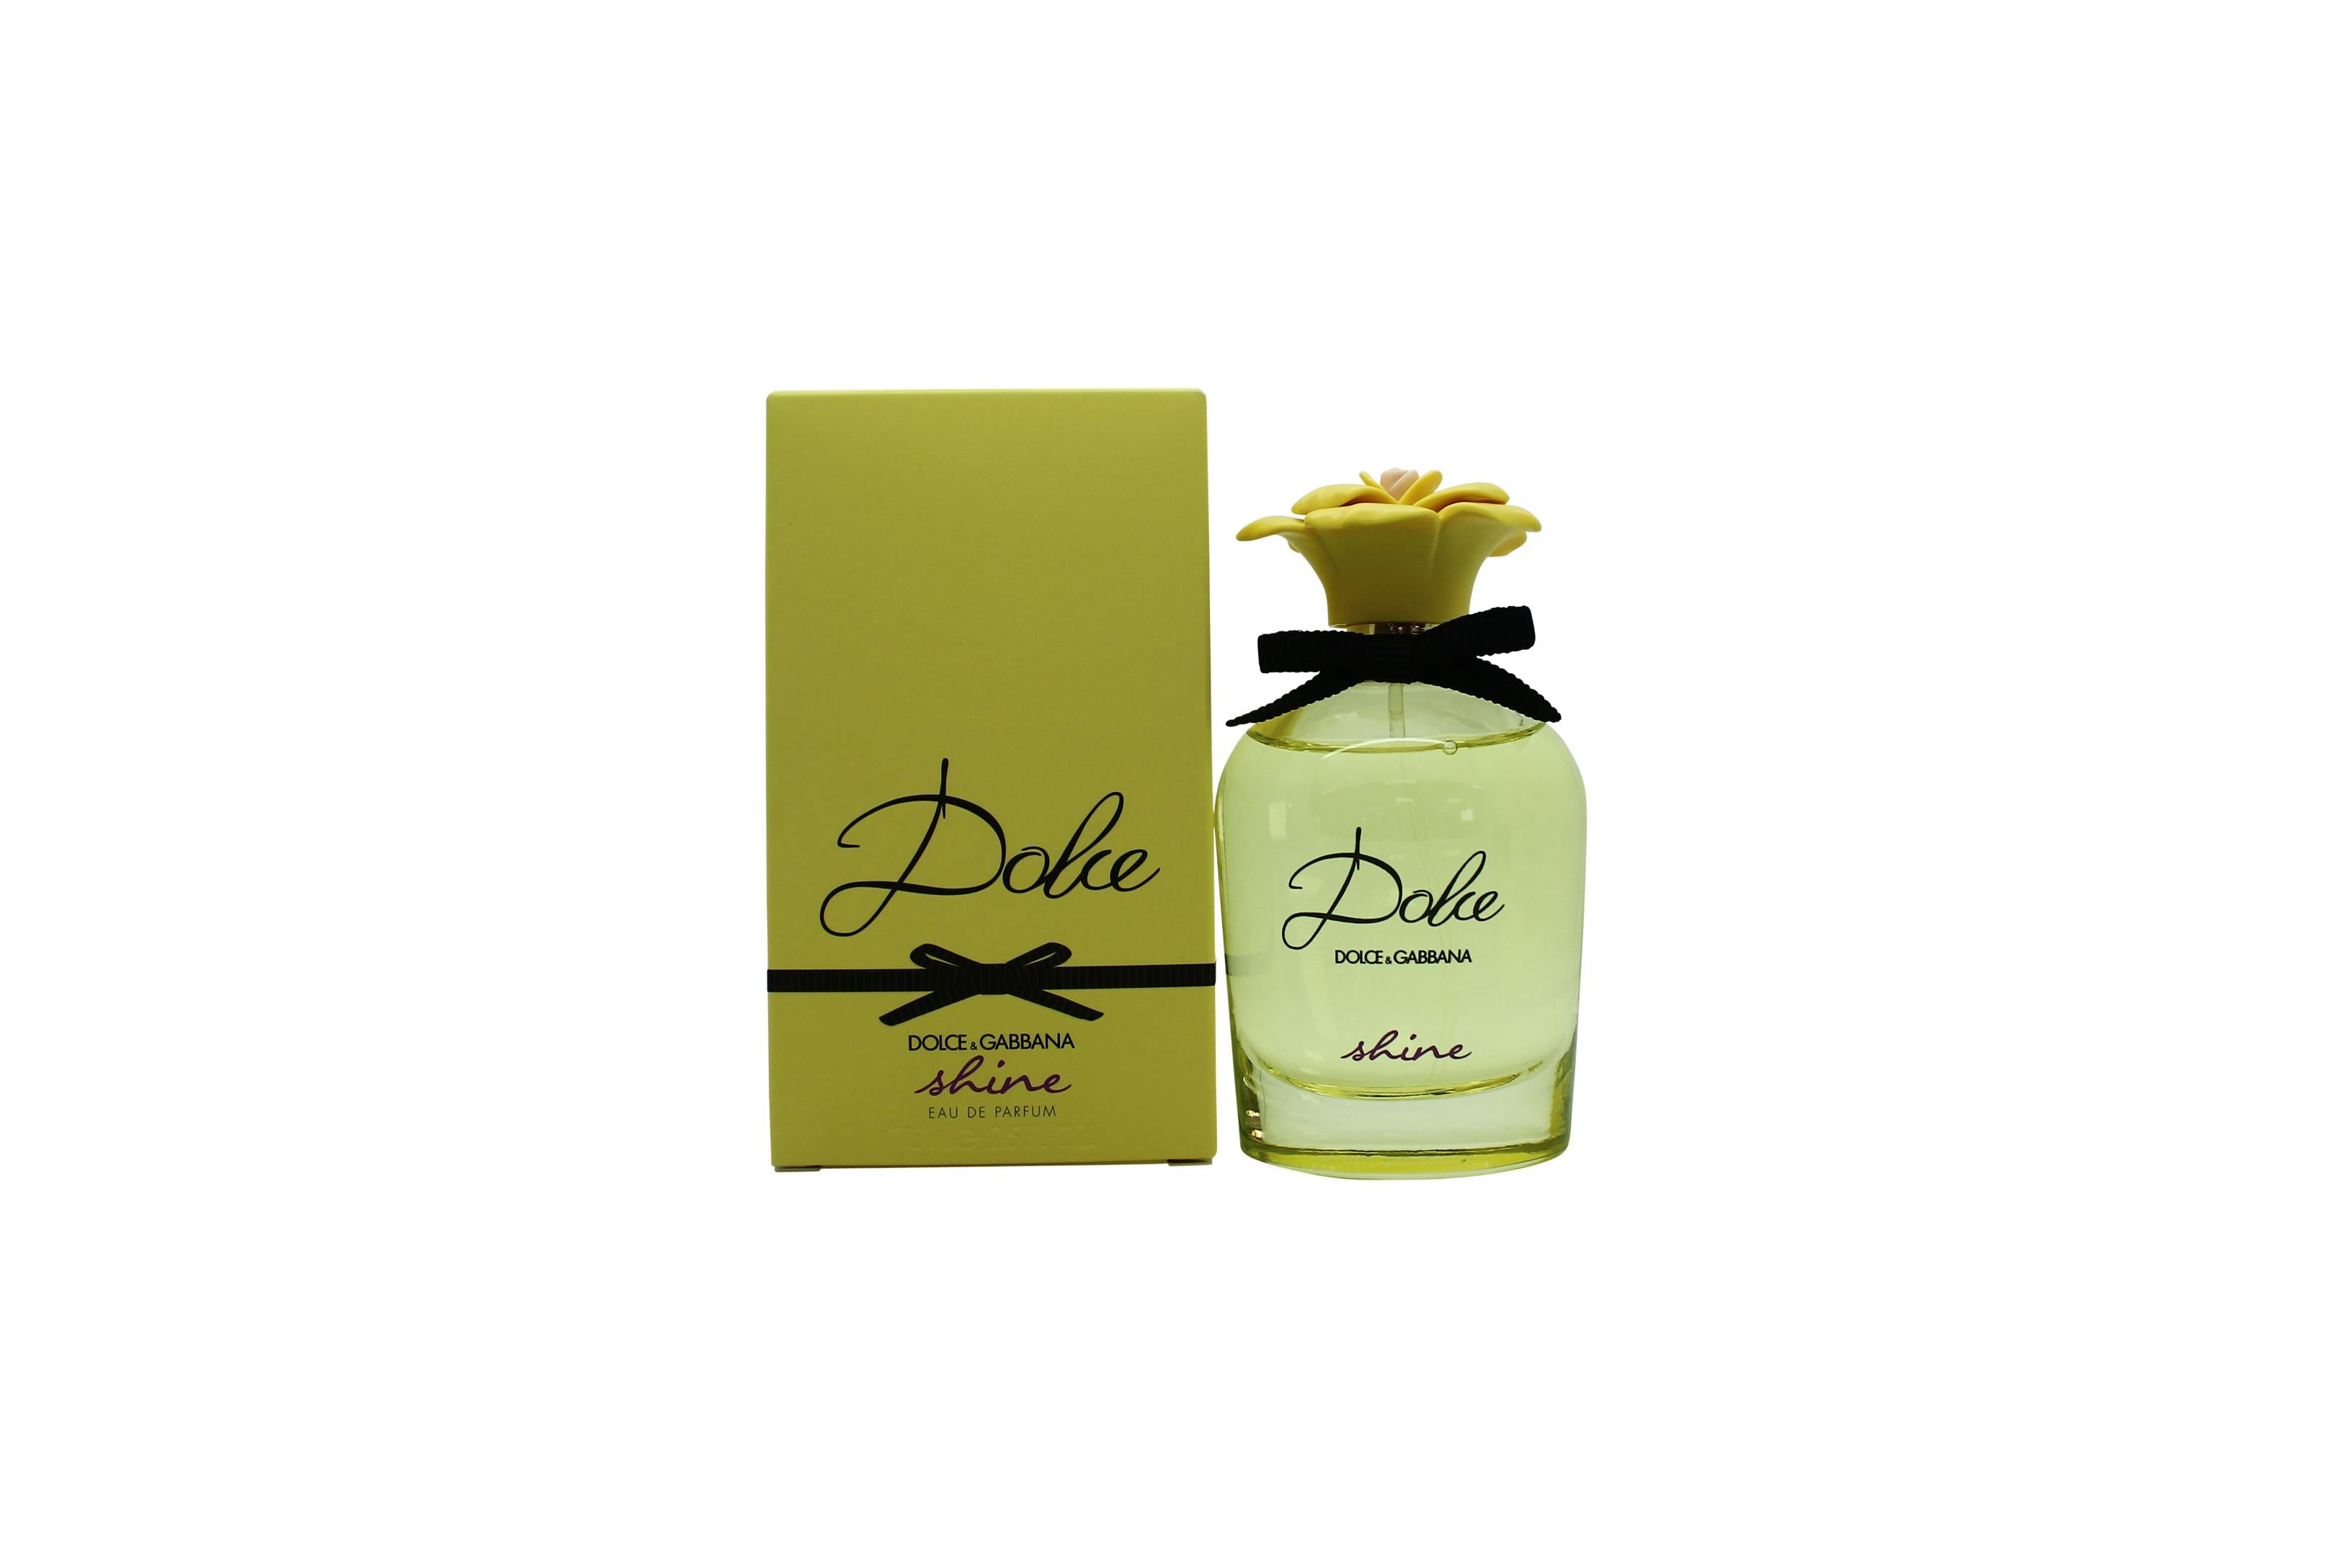 View Dolce Gabbana Dolce Shine Eau de Parfum 75ml Spray information